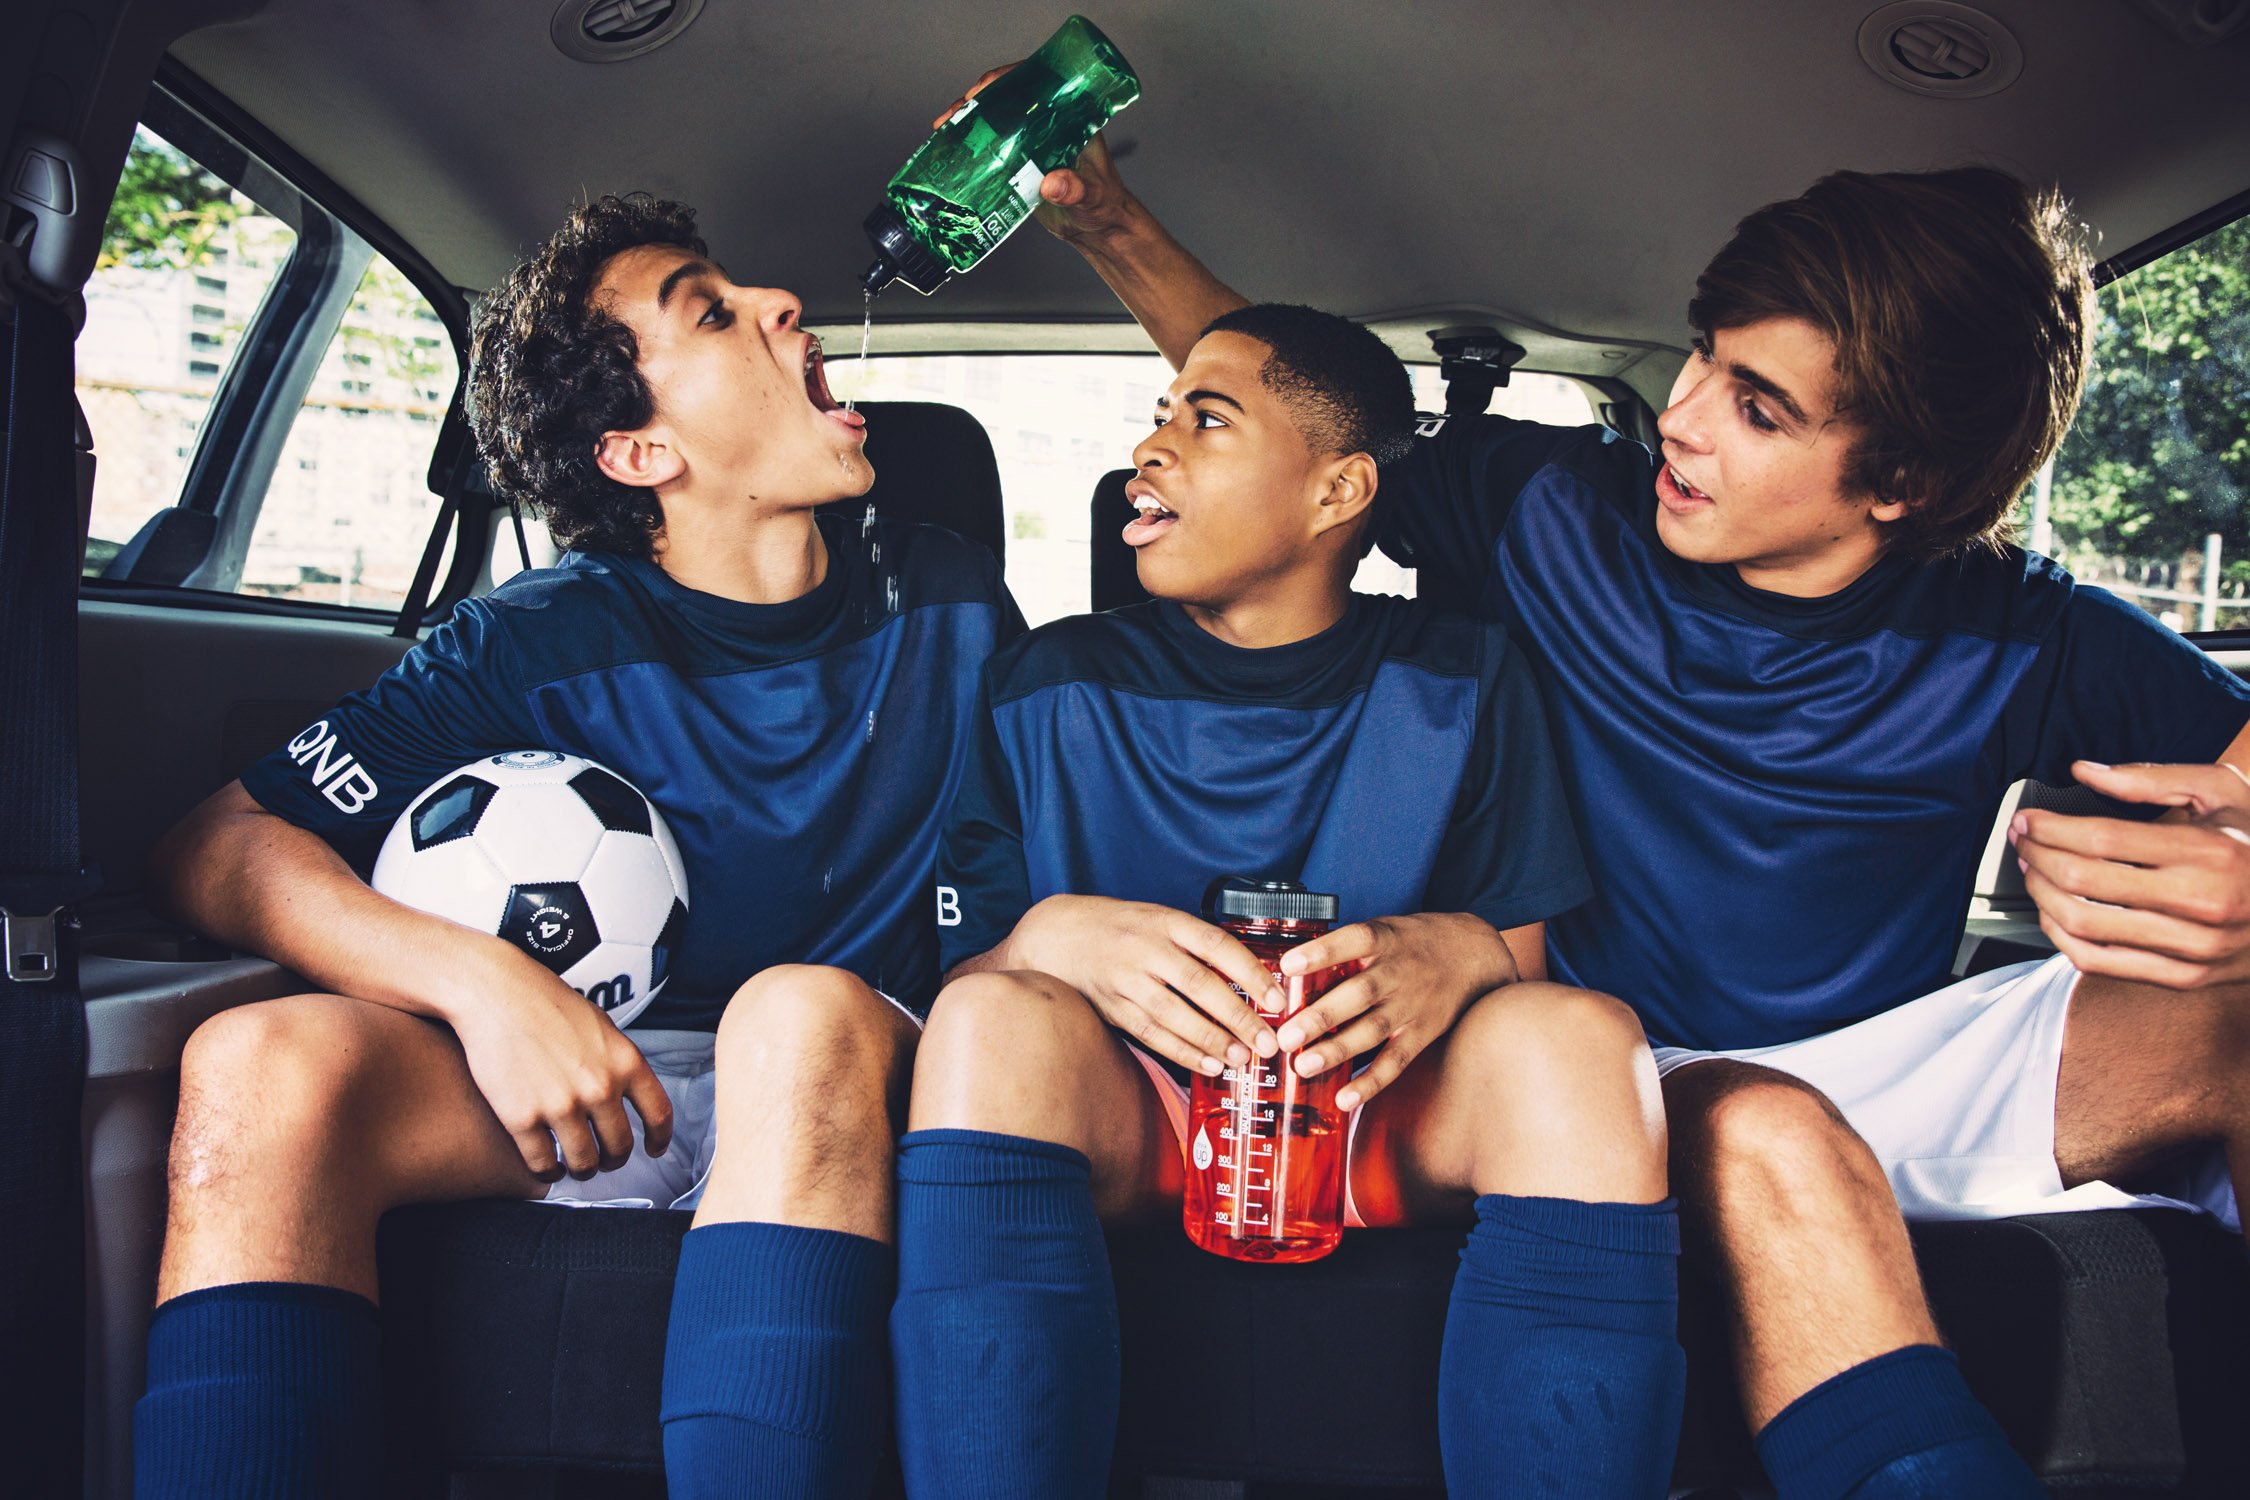 CommercialTr kids in car drinking water 6017.jpg